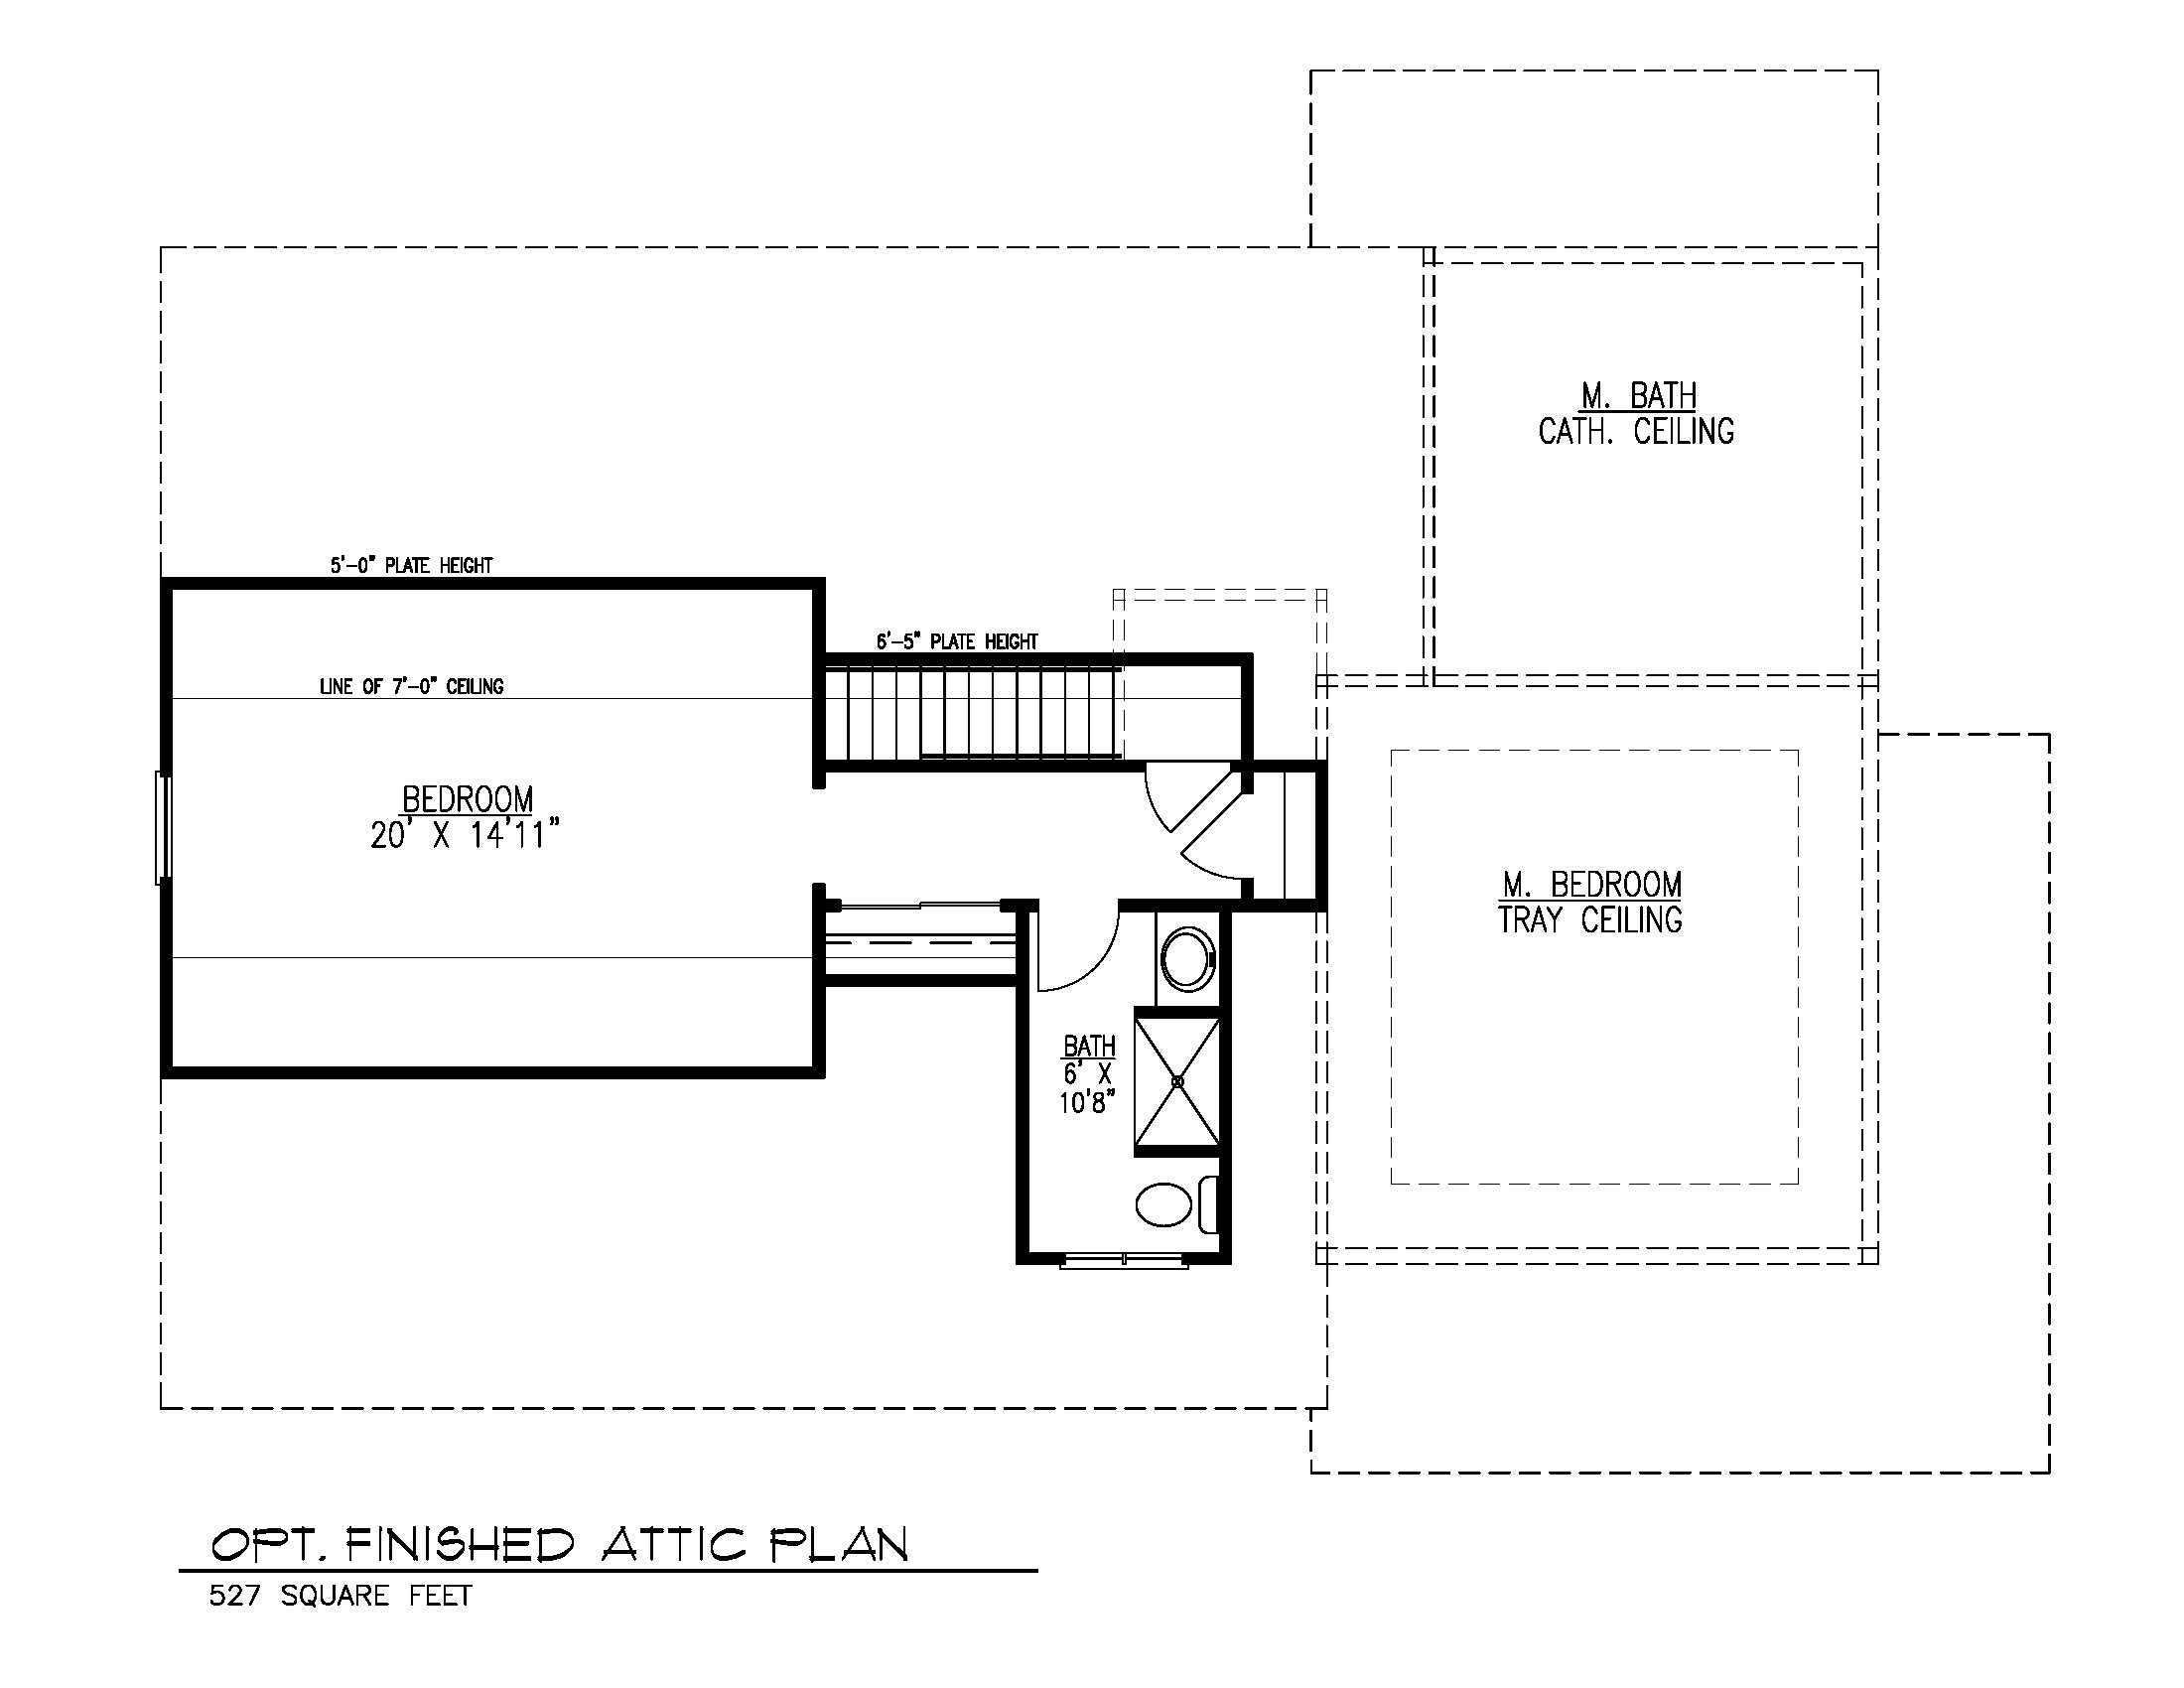 Opt. Finished Attic Plan Premier Design Custom Homes